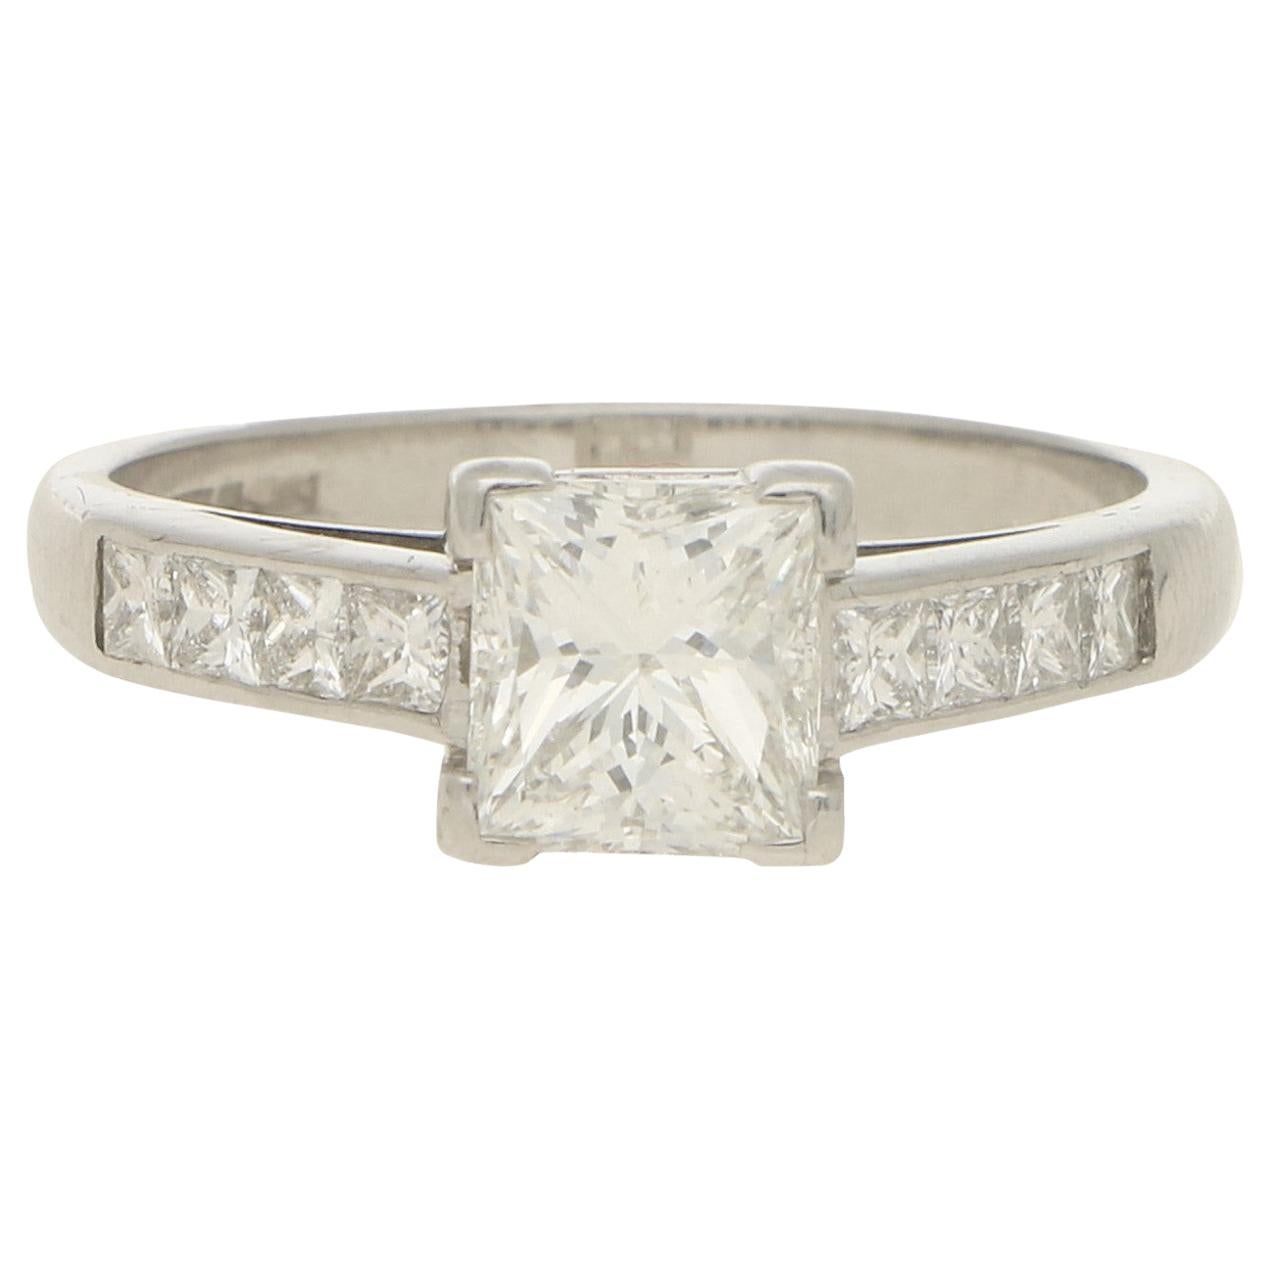 GIA Certified Princess Cut Diamond Engagement Ring Set in Platinum